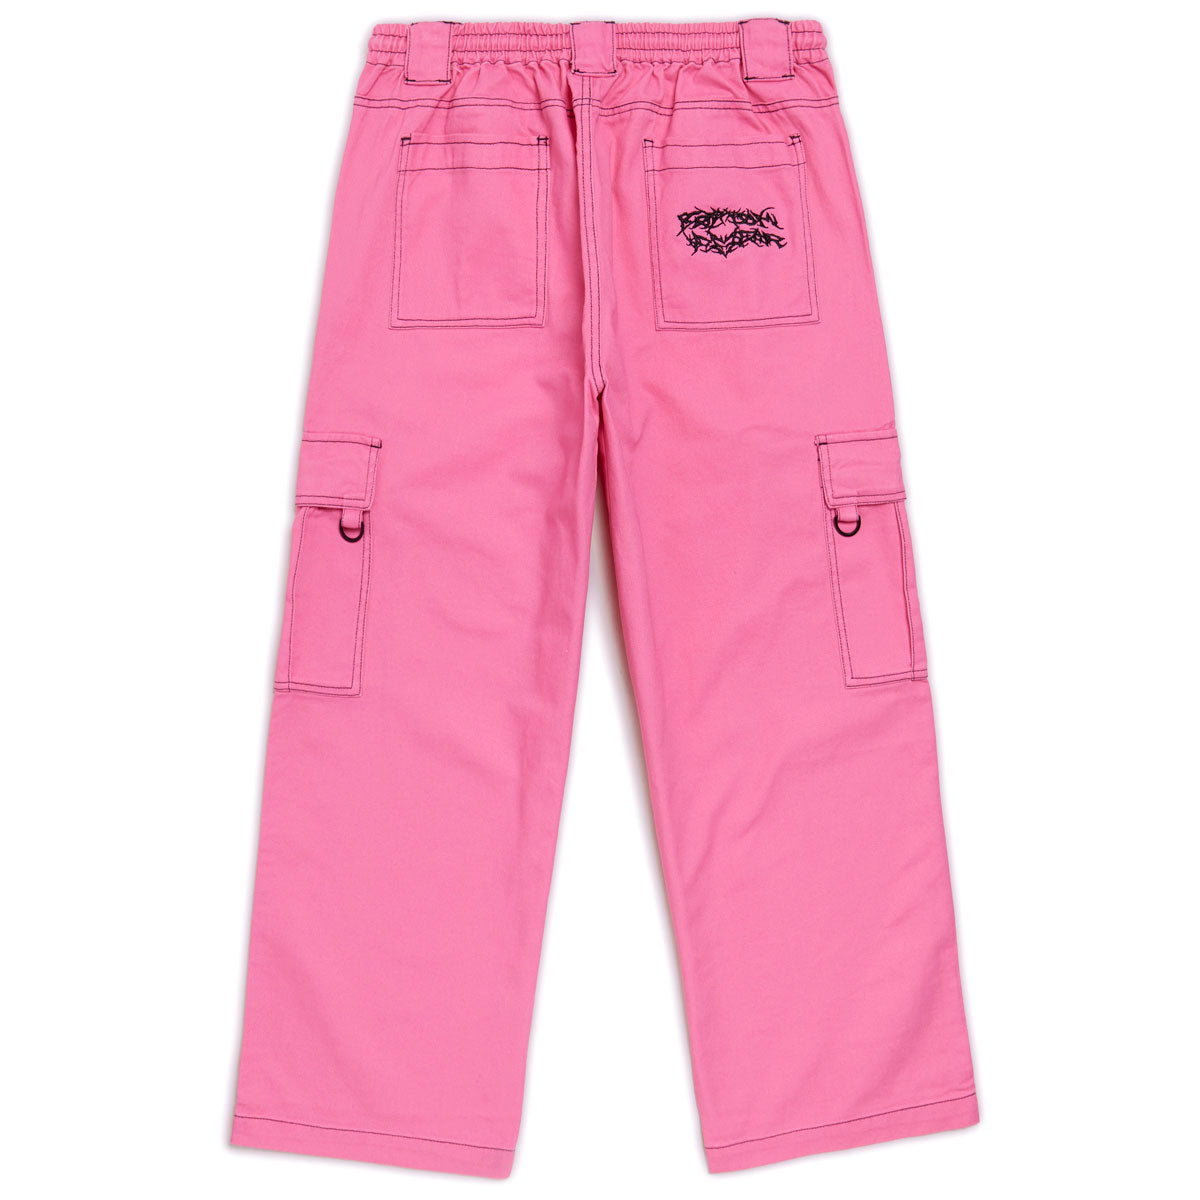 CCS Titus Twill Cargo Pants - Pink/Black image 5